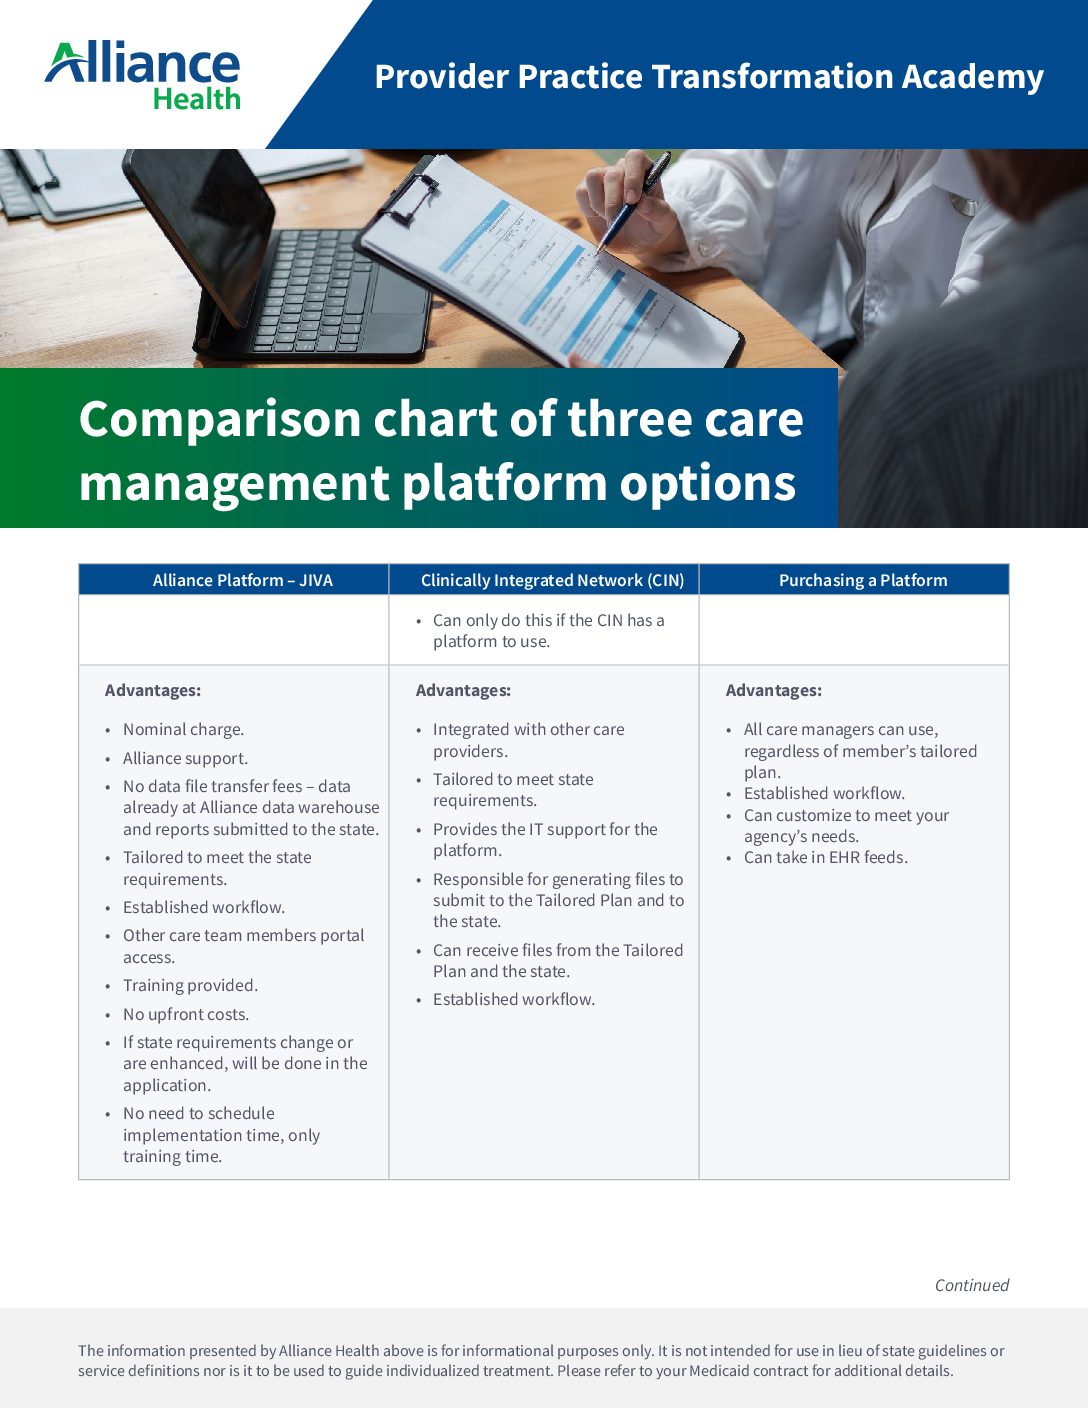 Care Management Platform Options